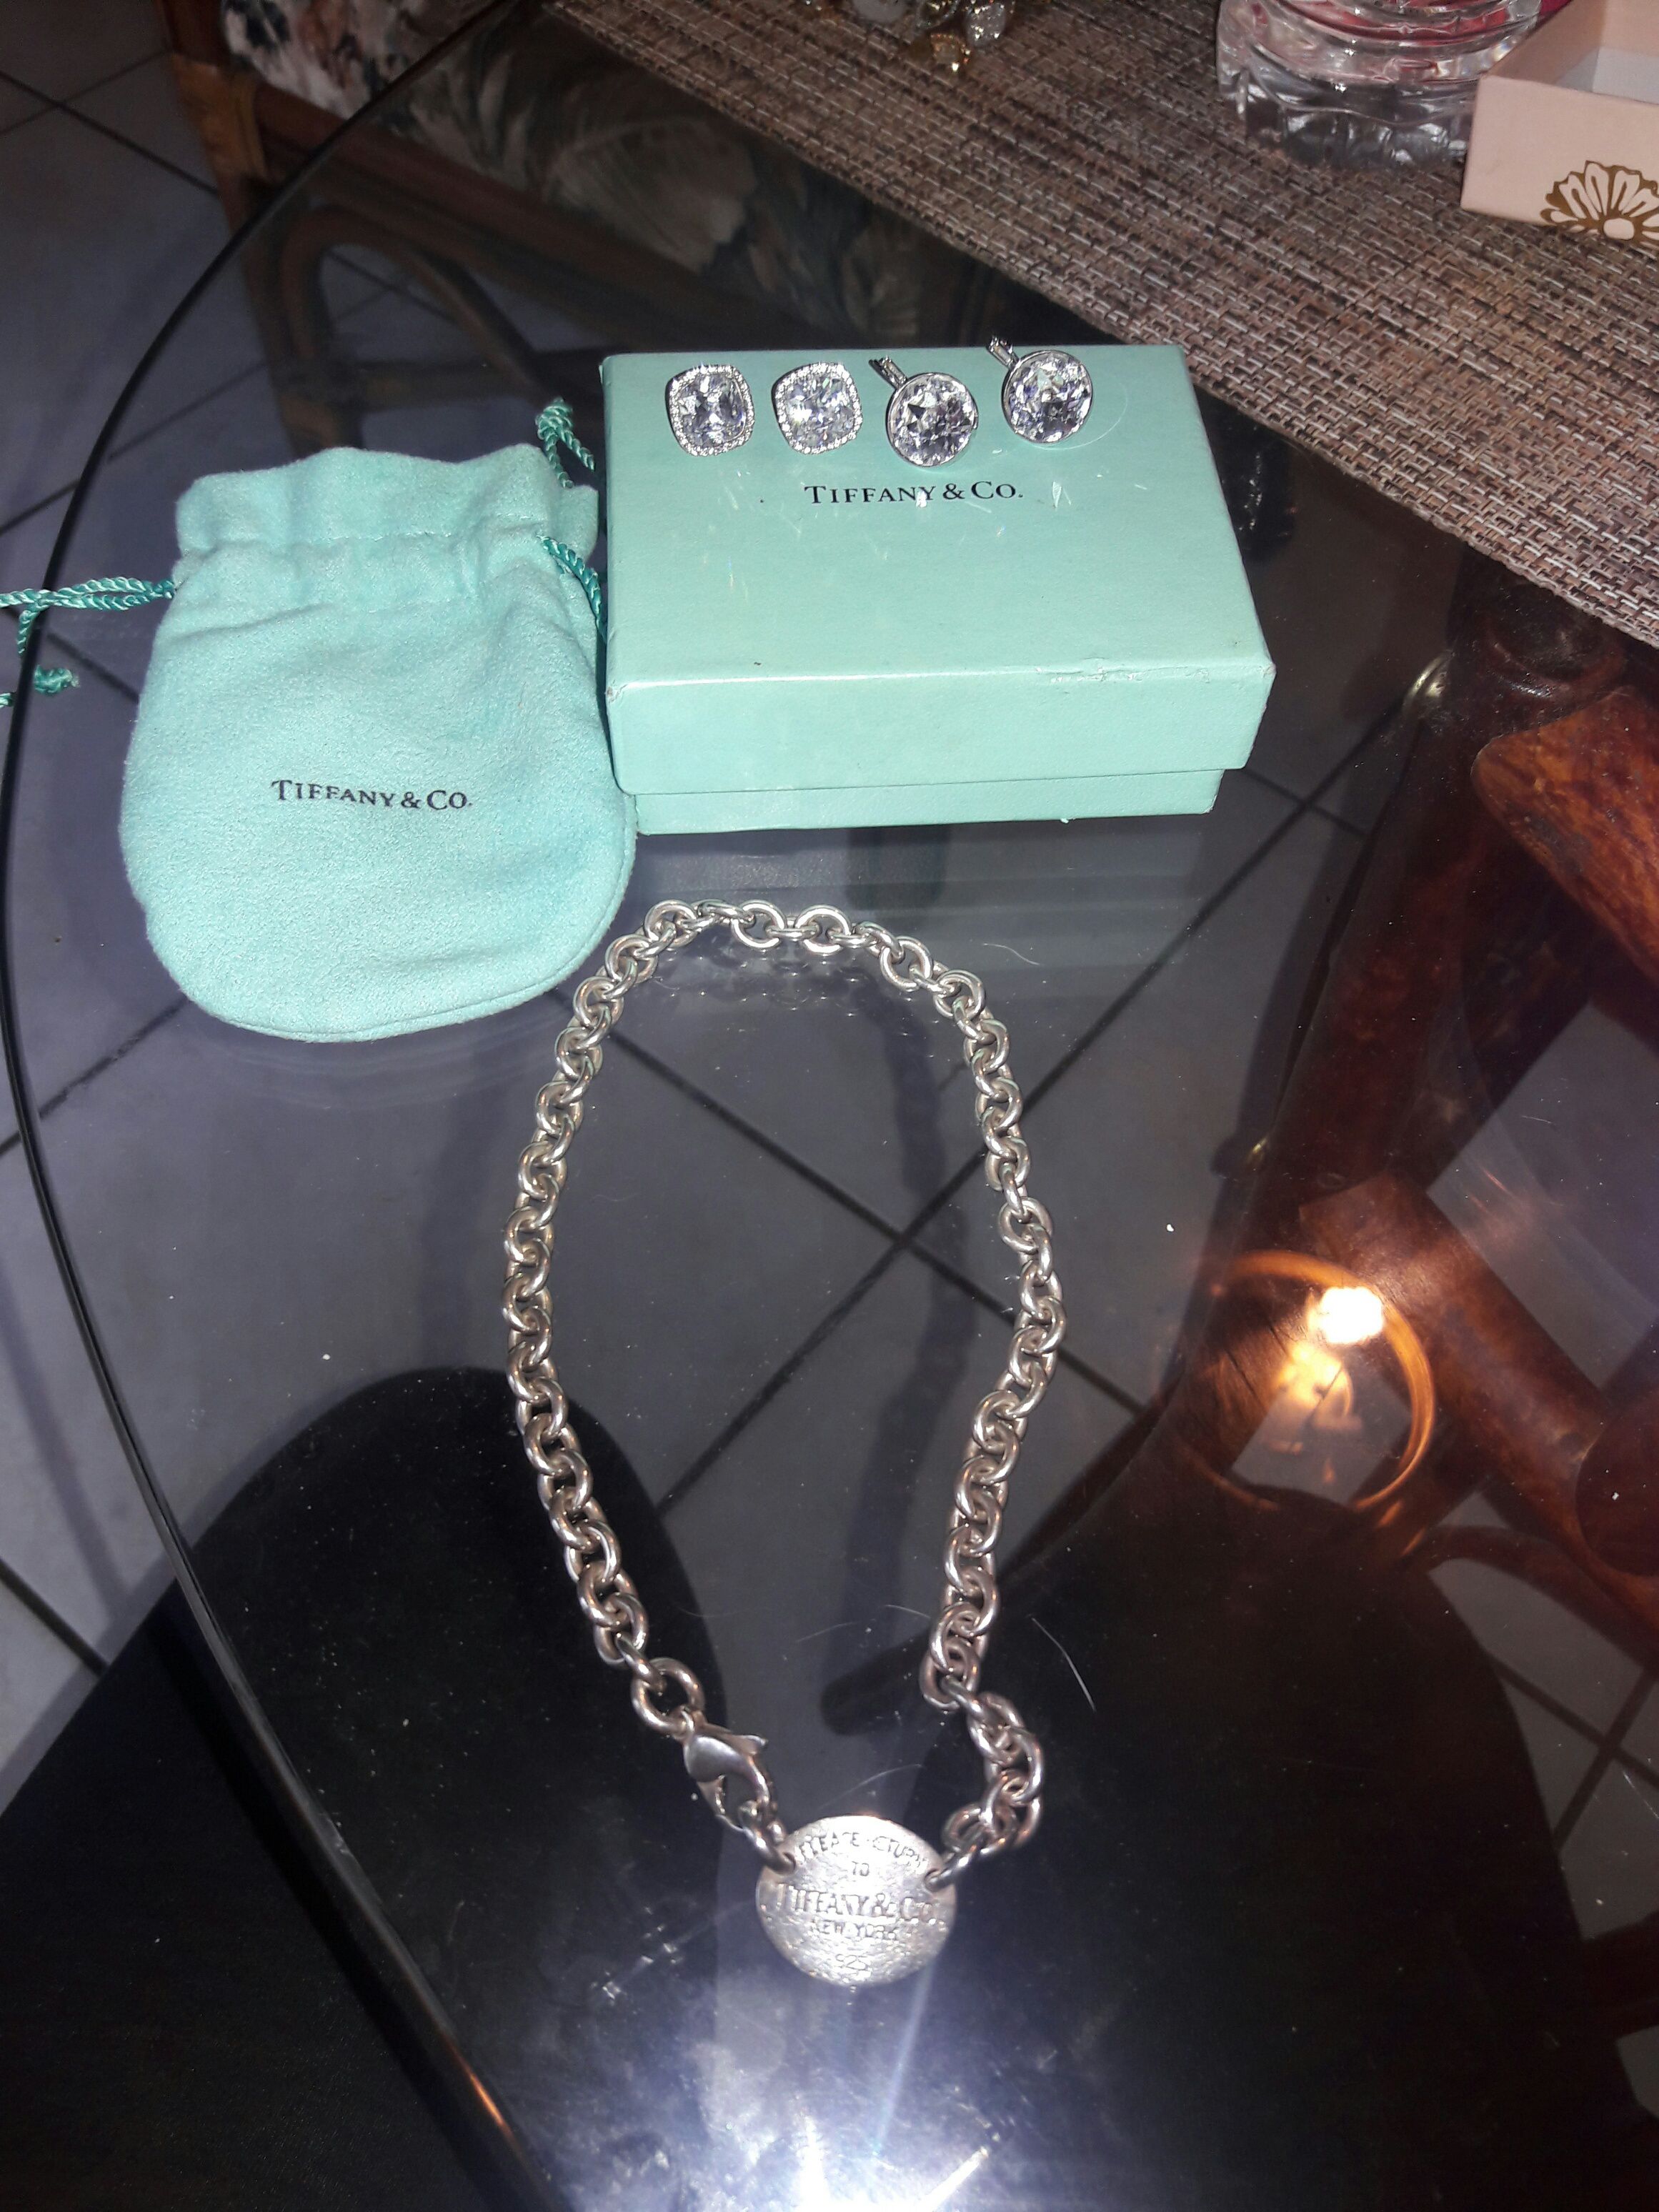 Juicy Couture handbags and wallet Juicy Couture jewelry Michael Kors wristlet Michael Kors wallet / wristlet